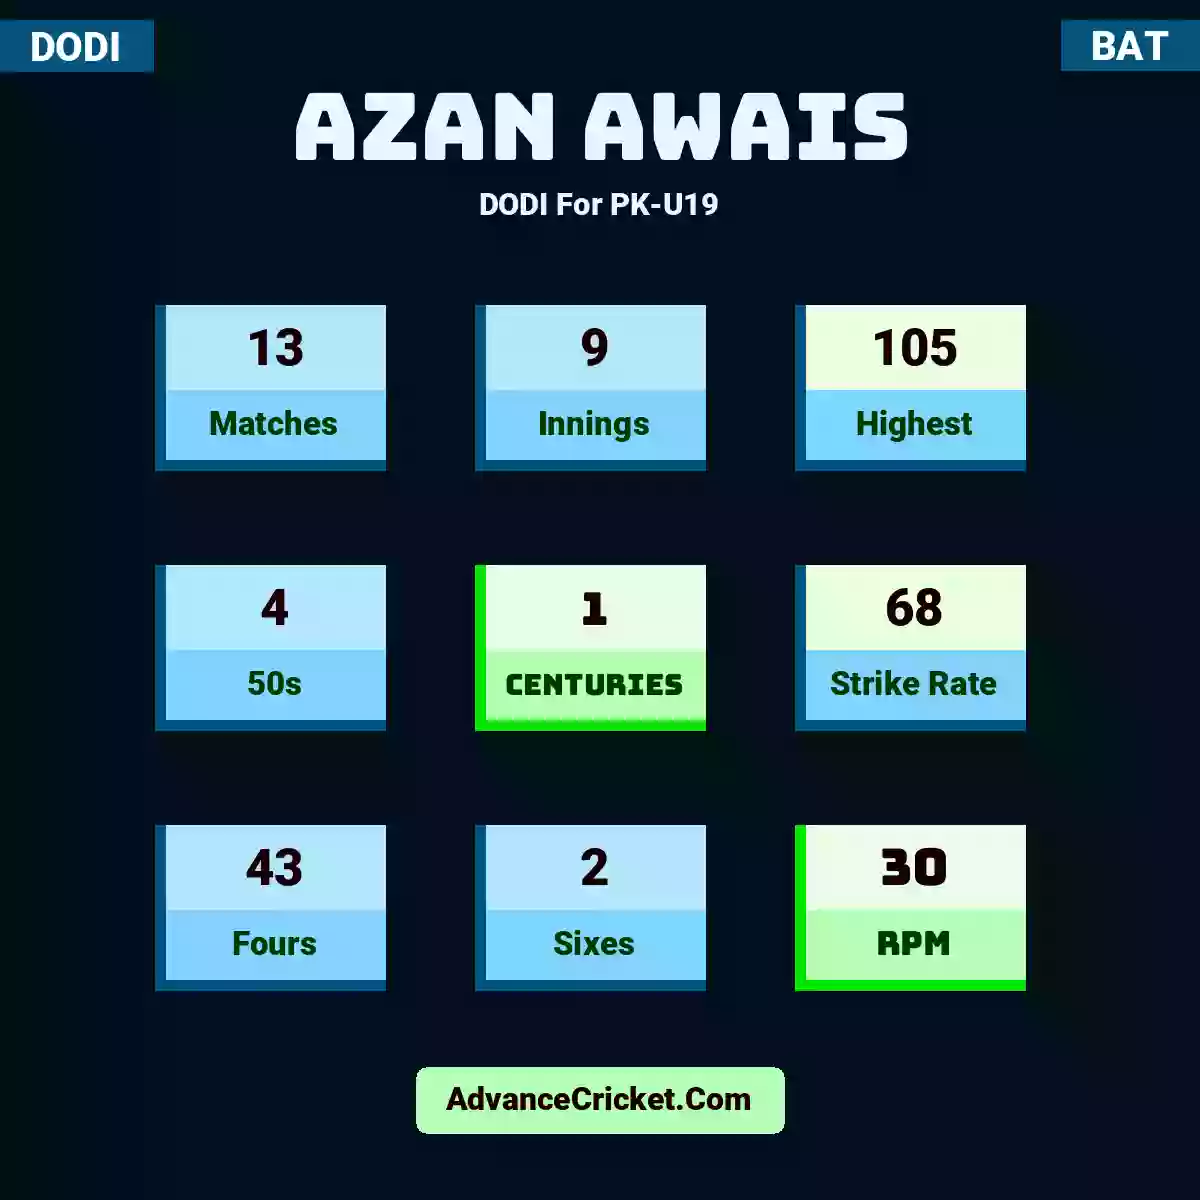 Azan Awais DODI  For PK-U19, Azan Awais played 13 matches, scored 105 runs as highest, 4 half-centuries, and 1 centuries, with a strike rate of 68. A.Awais hit 43 fours and 2 sixes, with an RPM of 30.